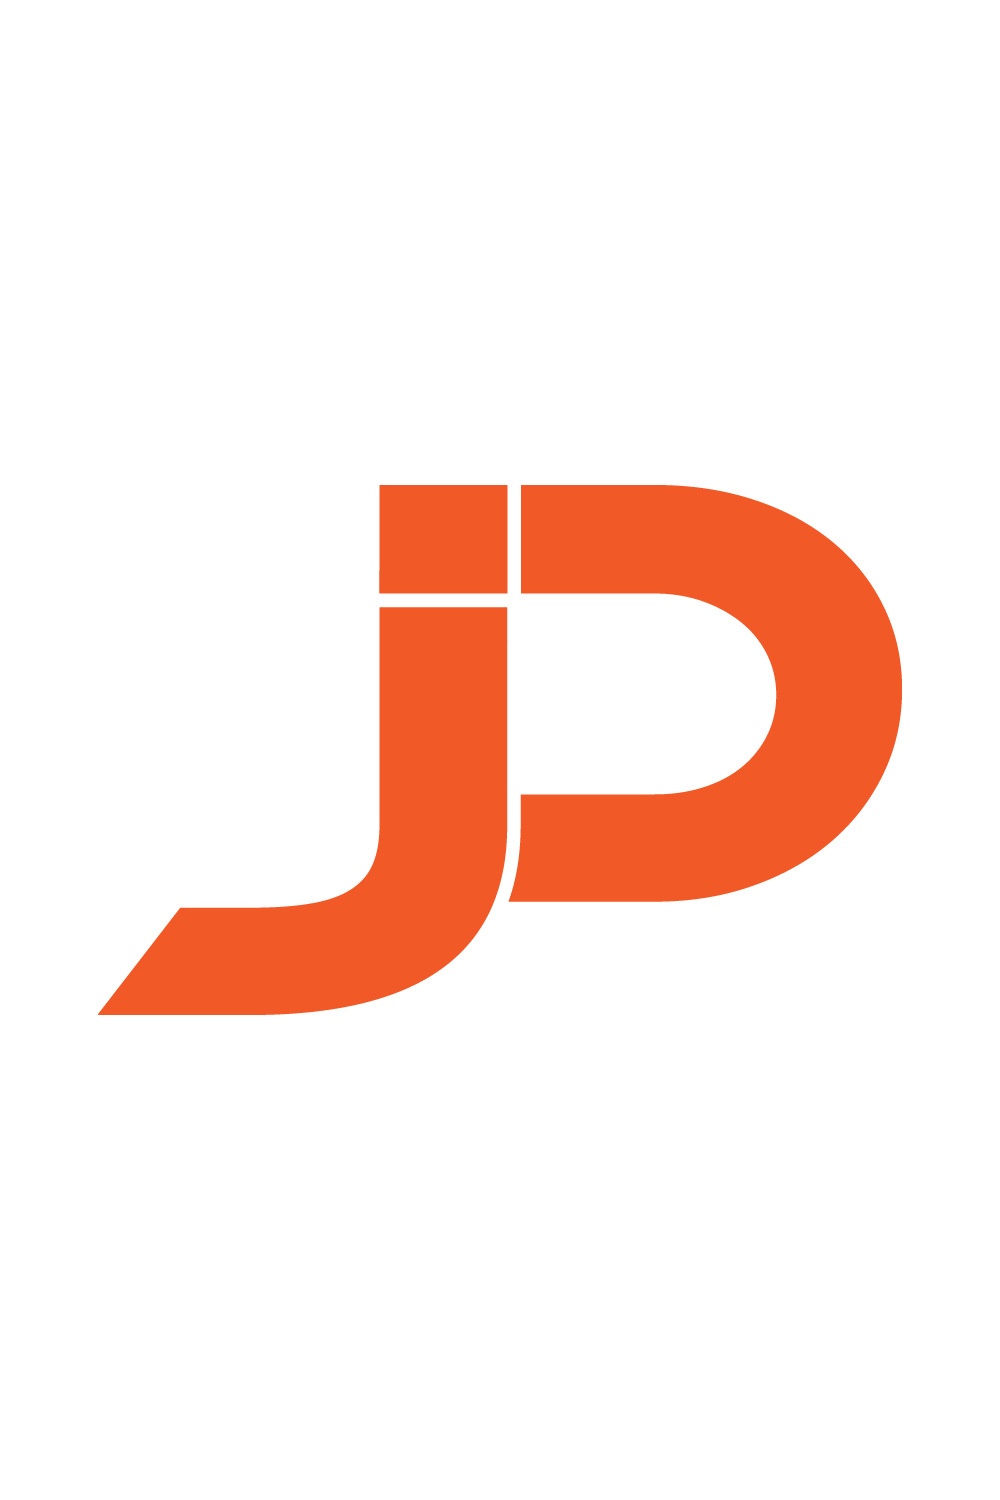 Initials JP letters logo design vector images P logo monogram template arts JP orange color best company icon pinterest preview image.